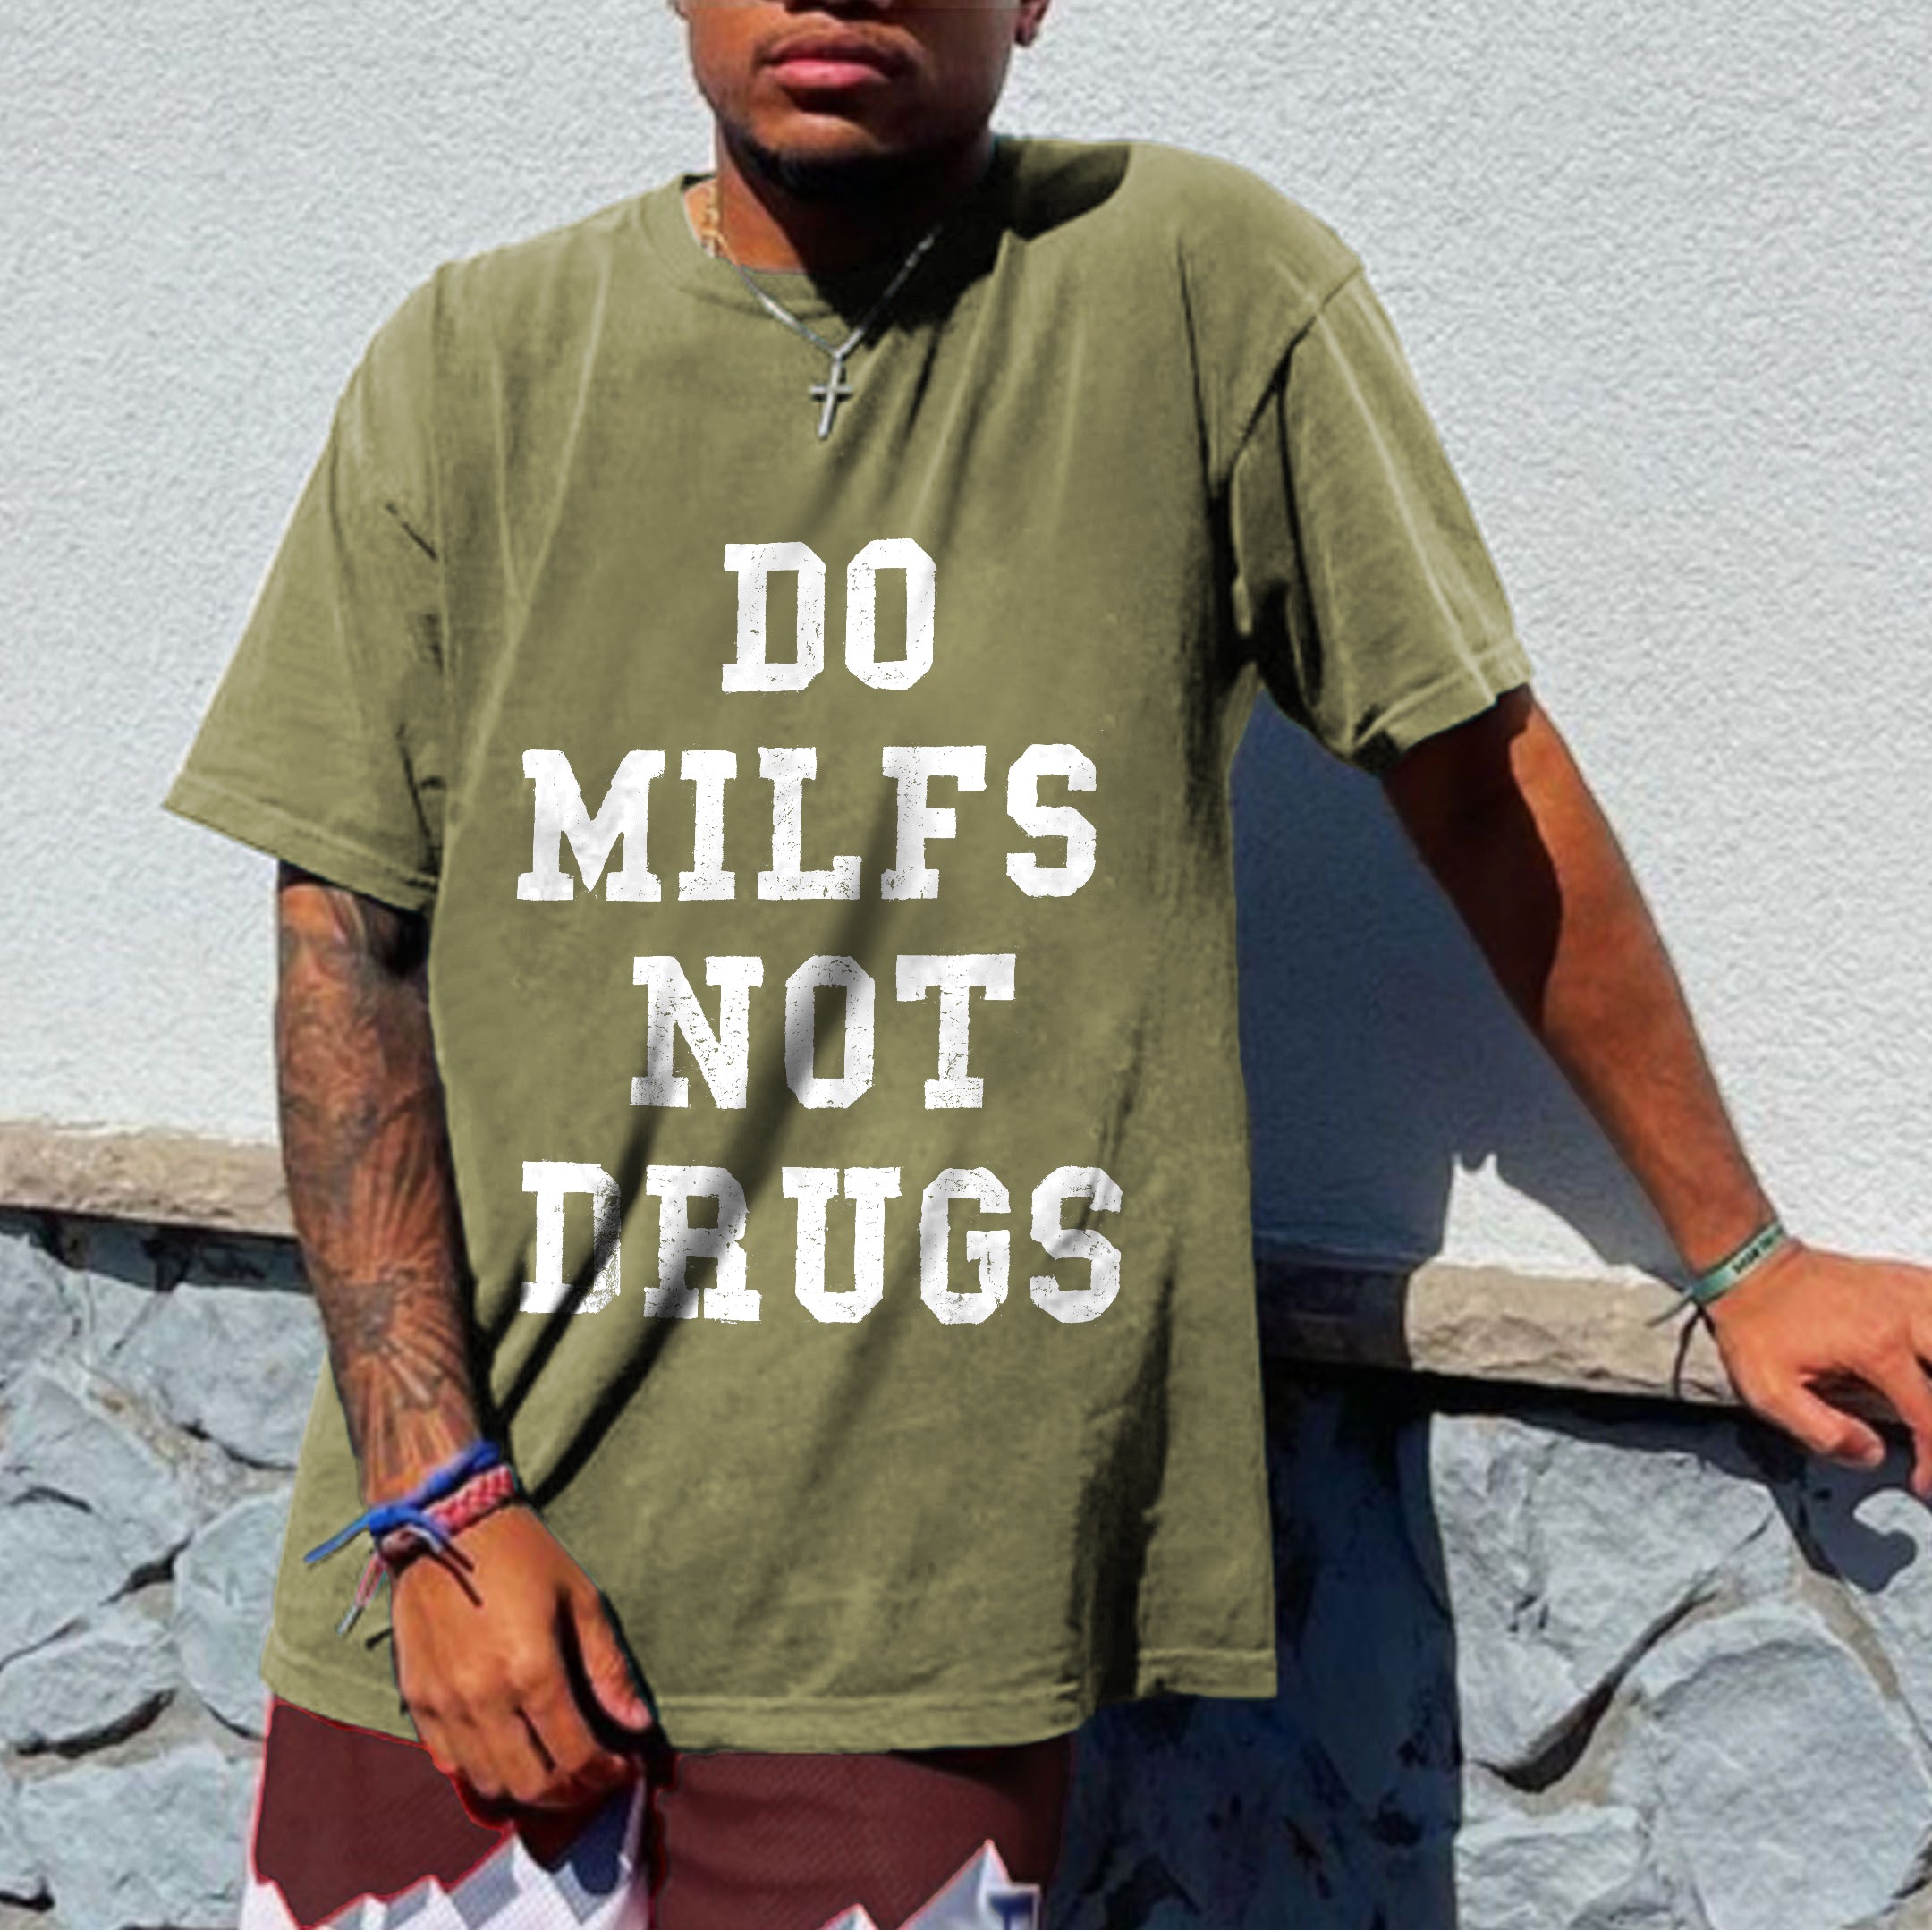 Do Milfs Not Drugs Print T-shirt